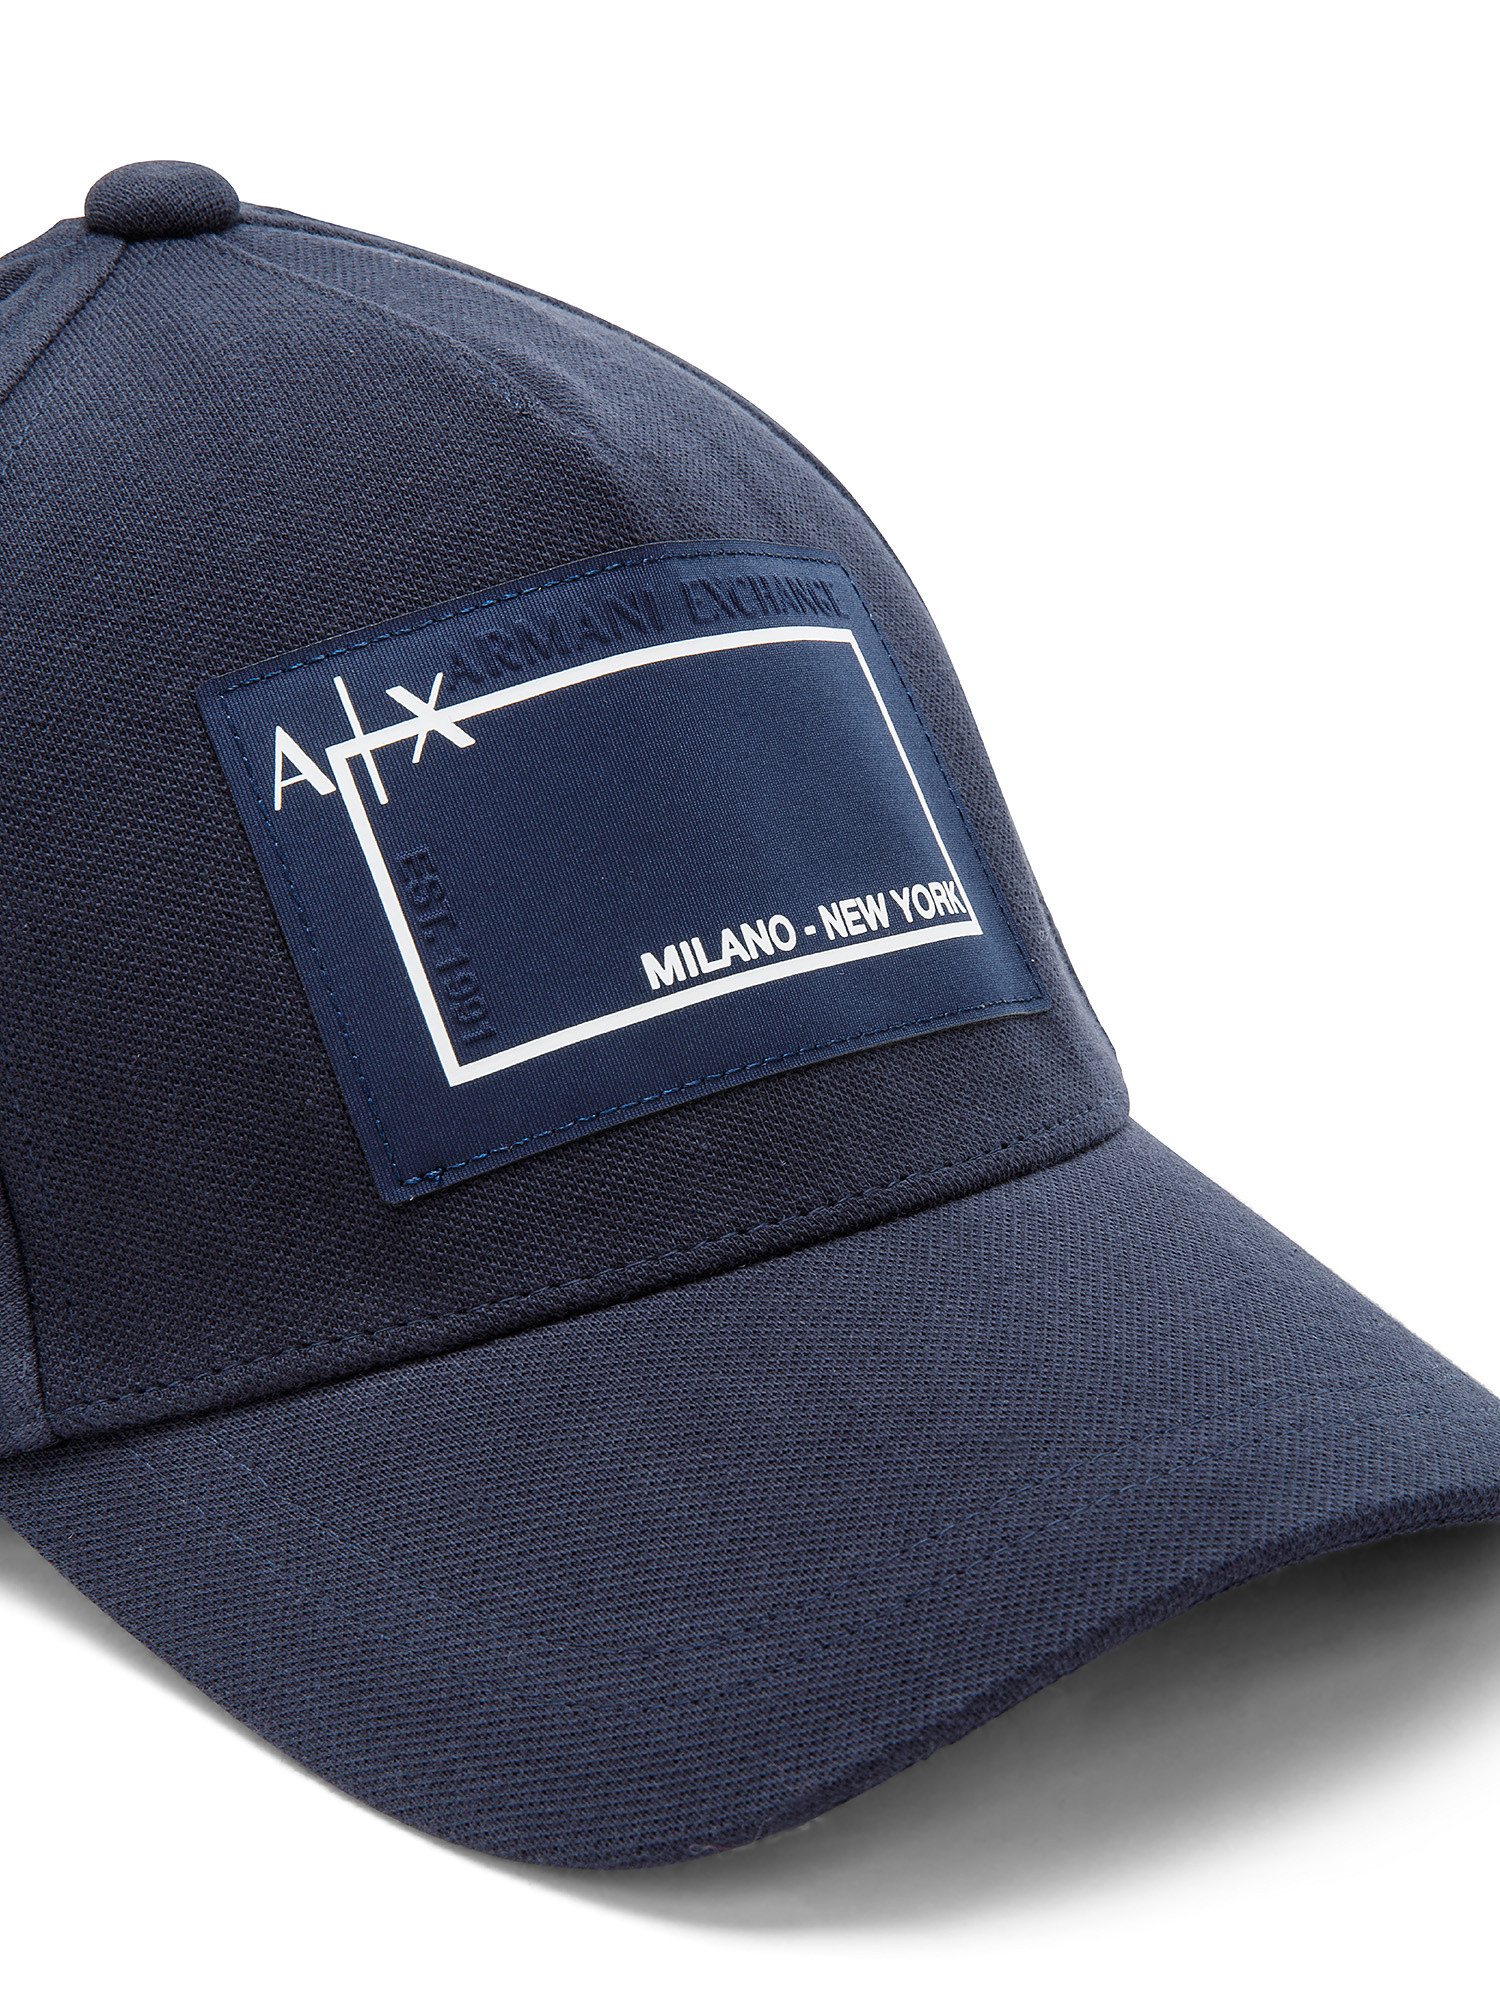 Armani Exchange - Cappello in piquet di cotone con visiera, Blu scuro, large image number 1